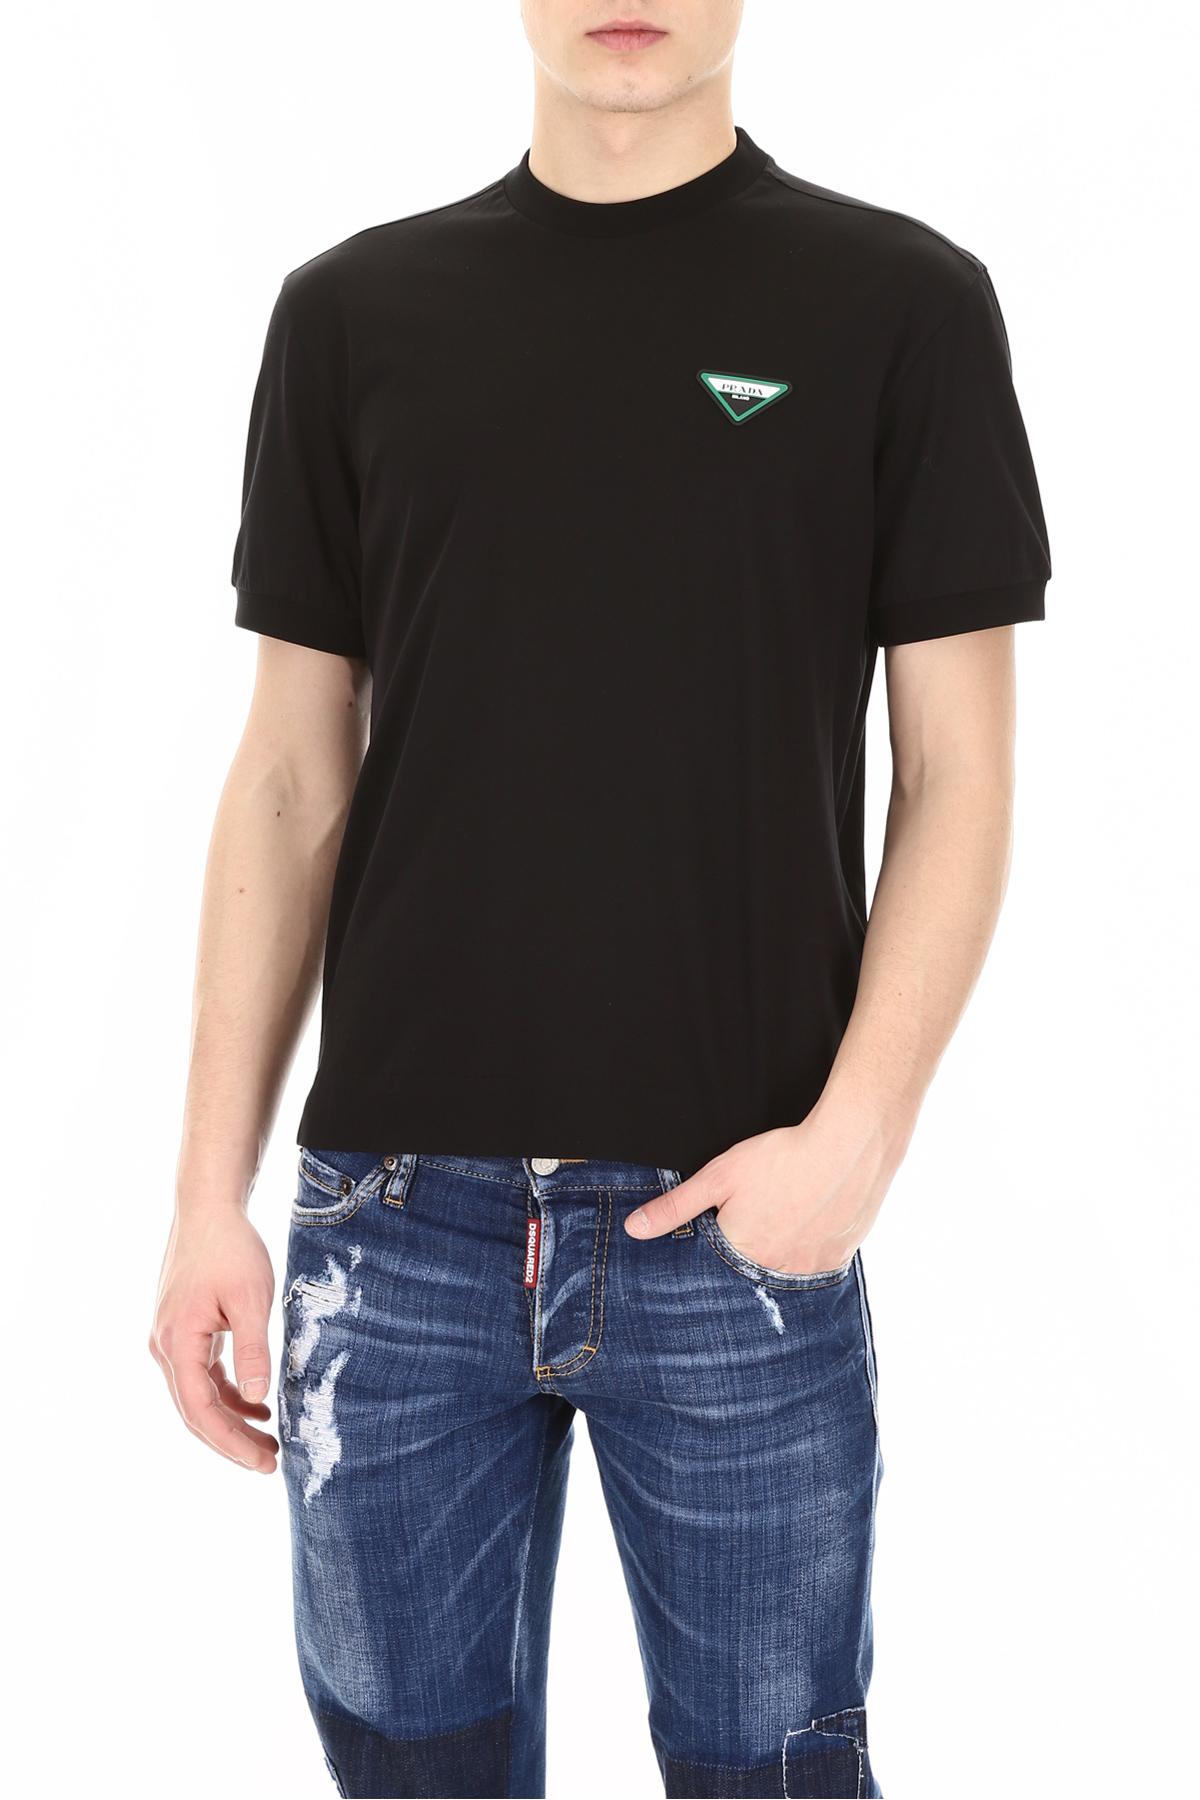 Prada Logo Triangle Cotton T-shirt in Nero (Black) for Men - Lyst